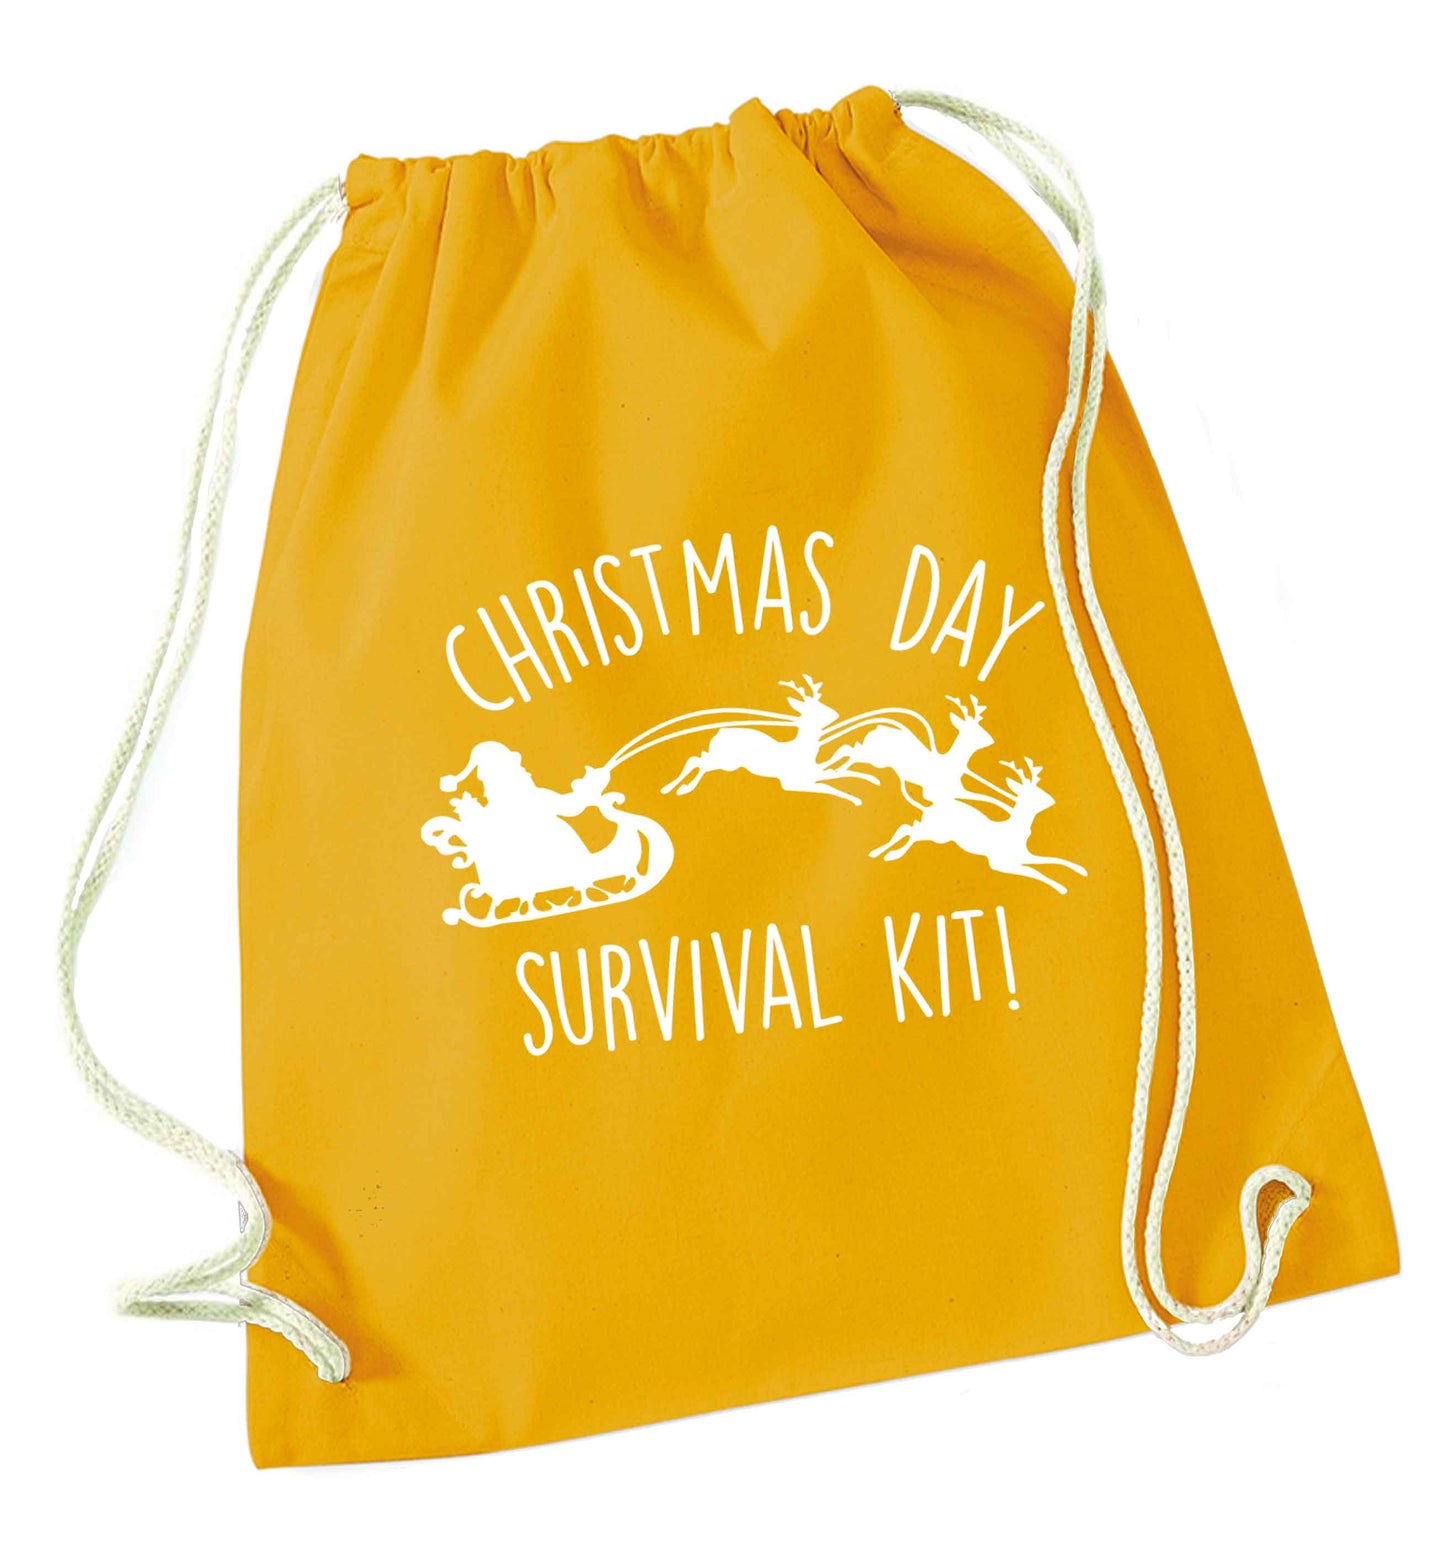 Christmas Day Survival Kitmustard drawstring bag